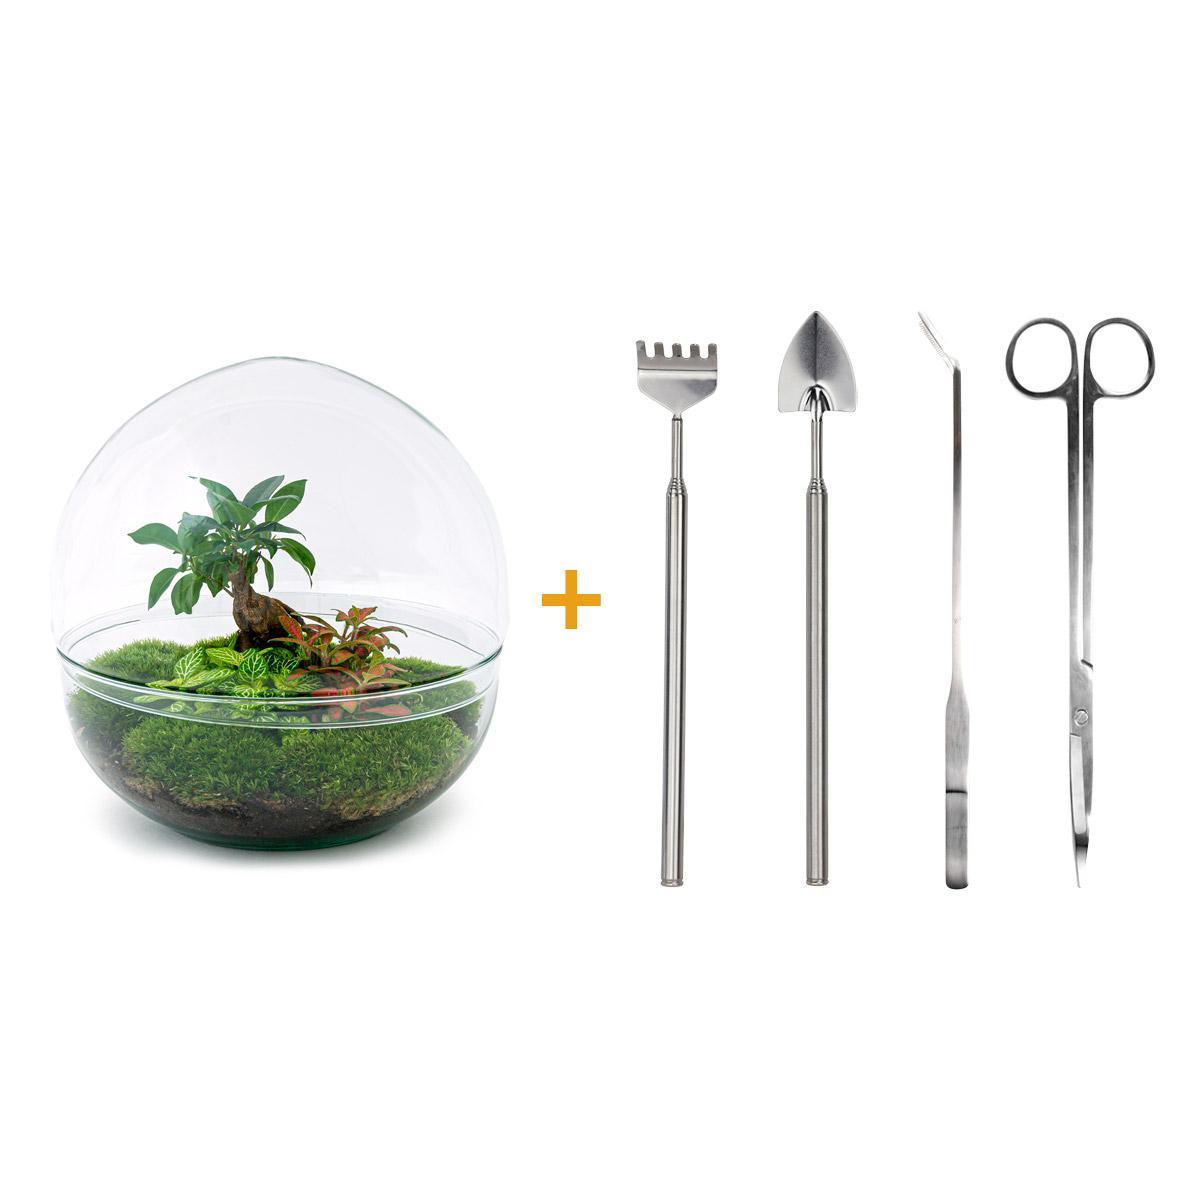 DIY terrarium - Dome XL - Ficus Ginseng Bonsai - ↕ 30 cm DIY terrarium - Dome XL - Ficus Ginseng Bonsai - ↕ 30 cm - Rake + Shovel + Tweezer + Scissors